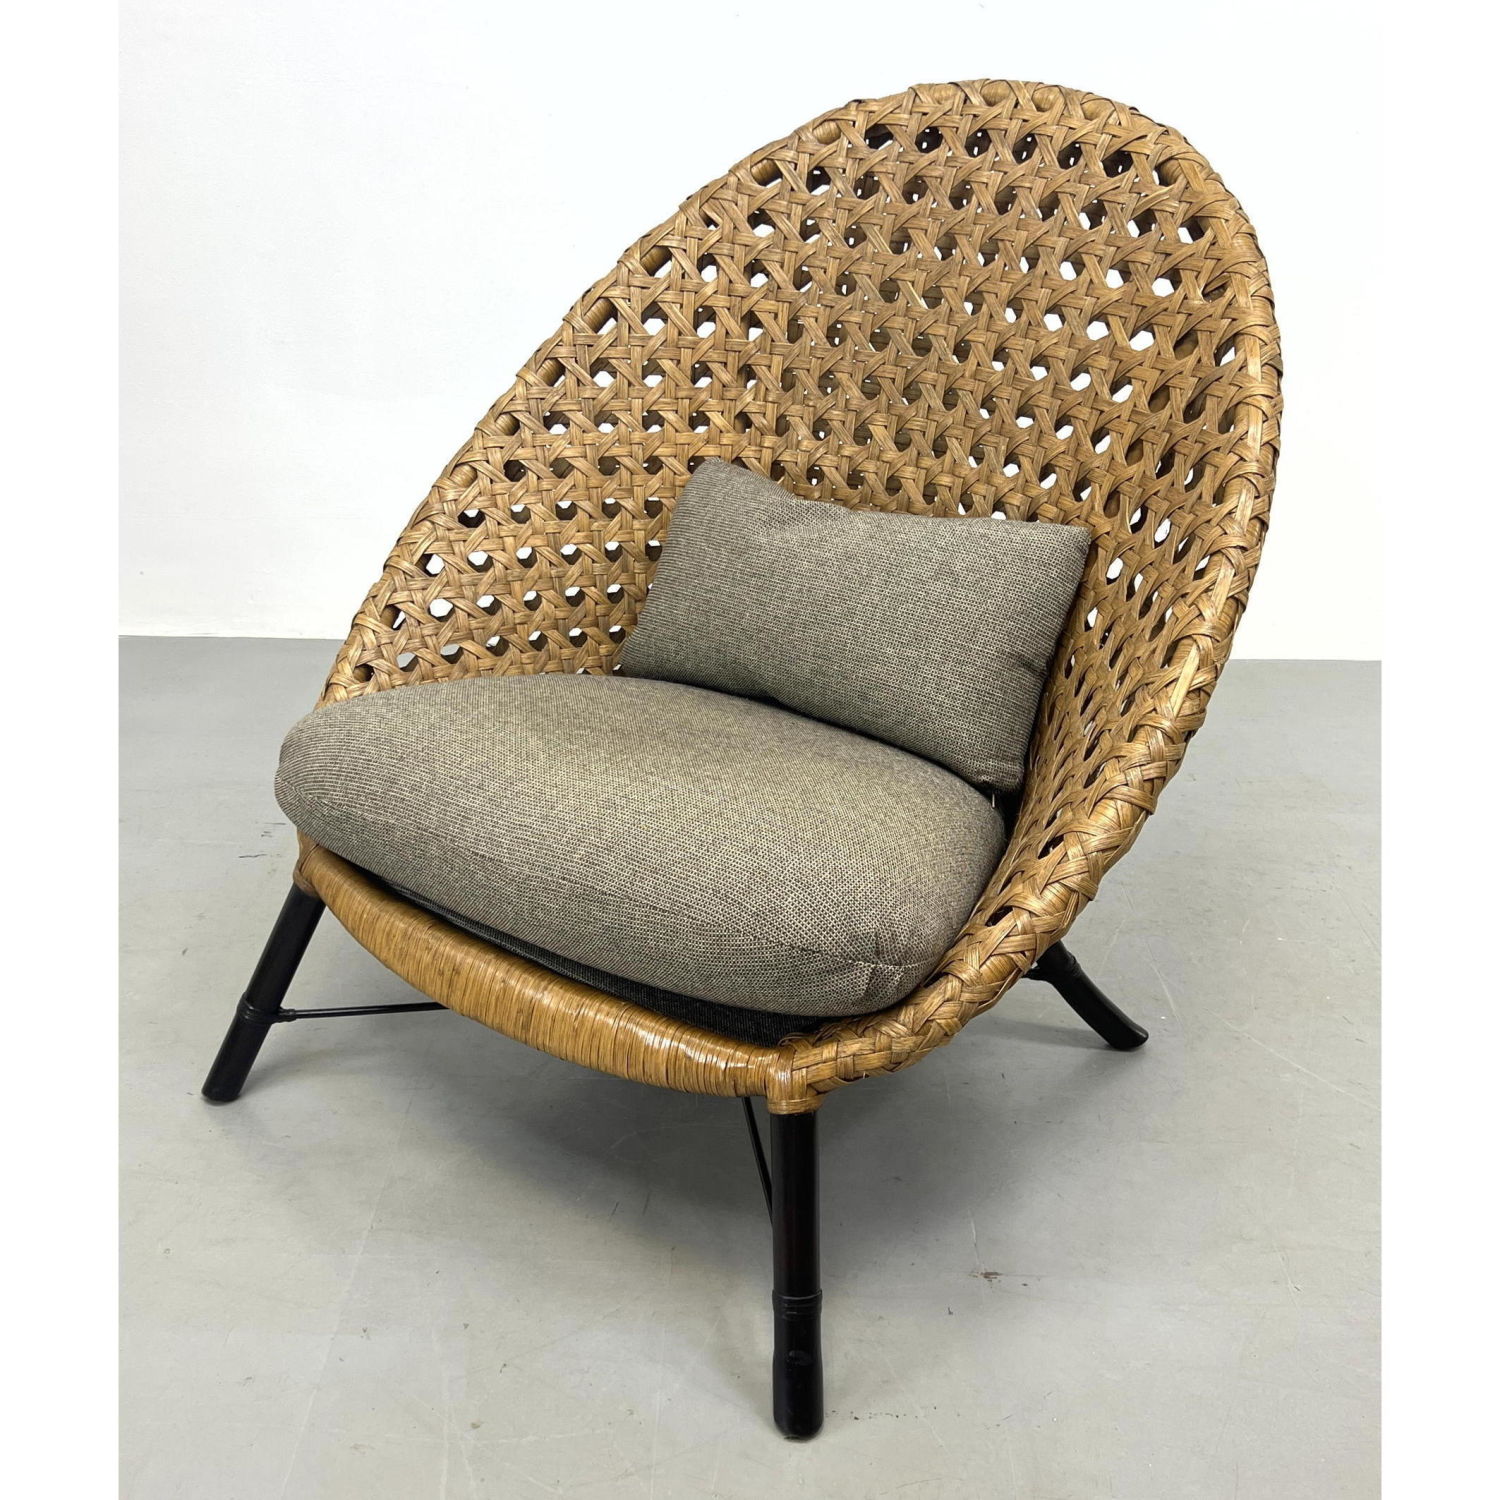 Bernhardt Woven Rattan Lounge Chair  2b8c61